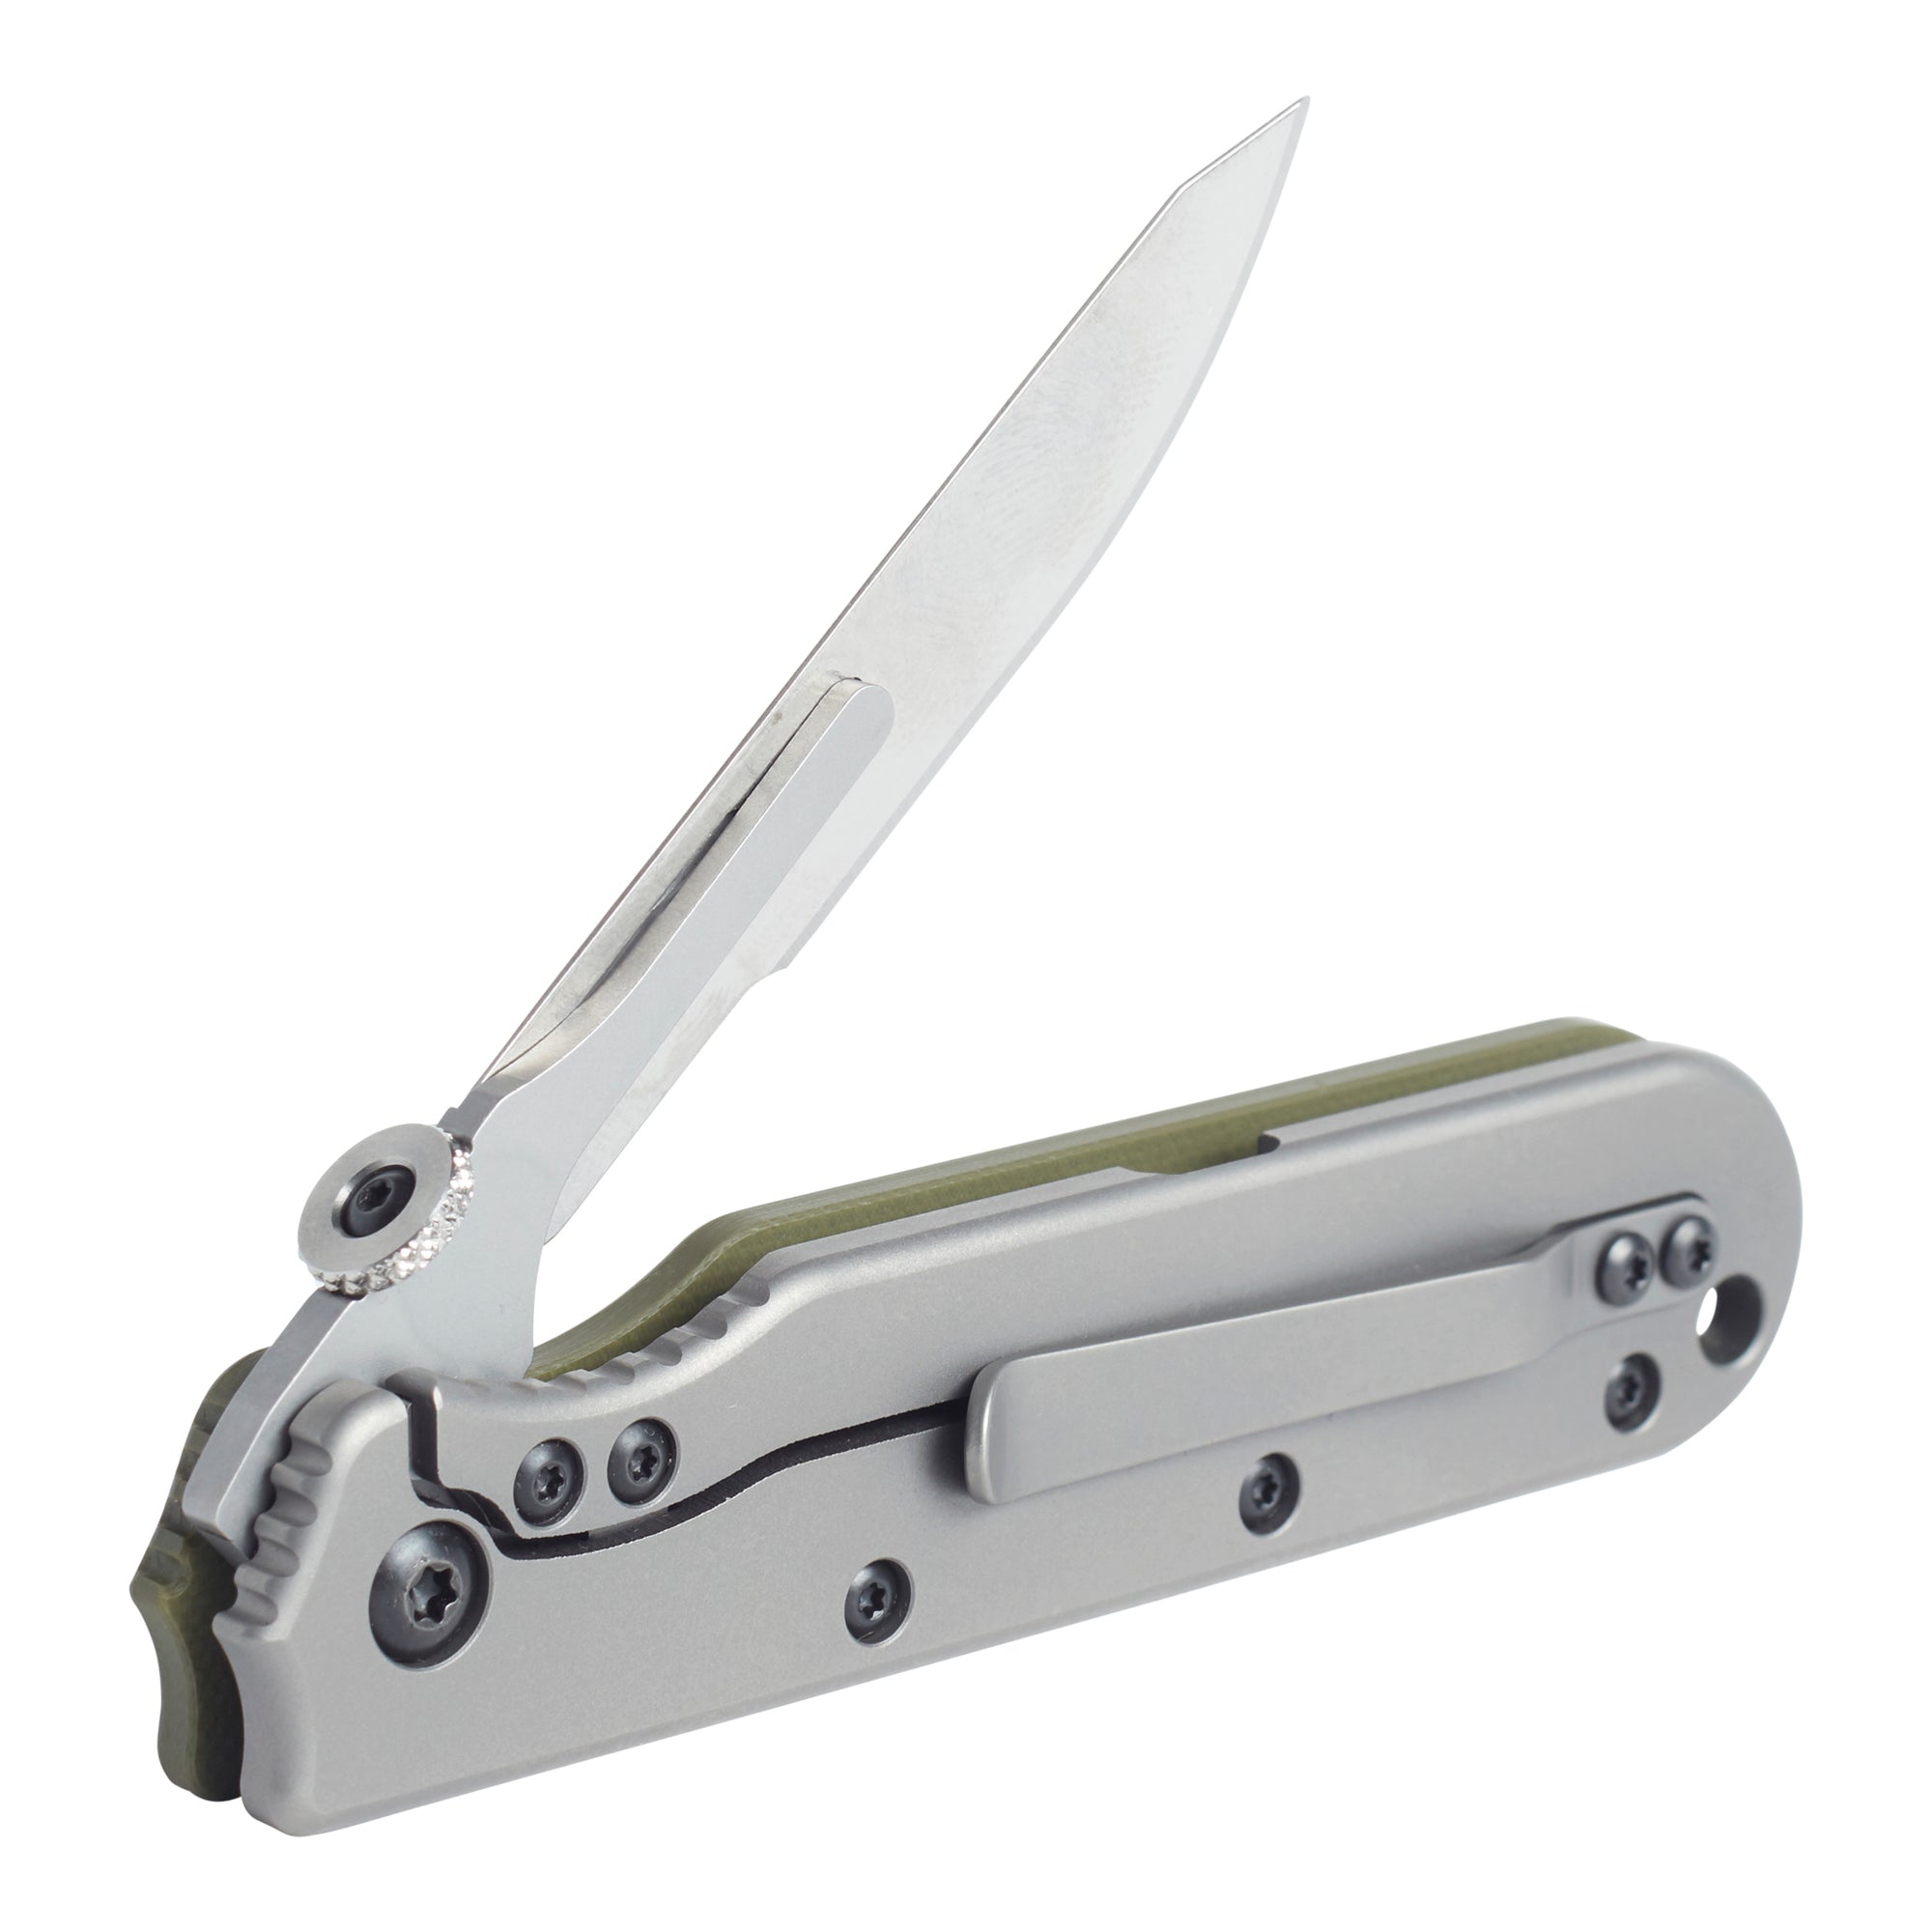 CIVILWARE. [IBK] Scalpel Folding Knife. OD Green. - Civilware® All